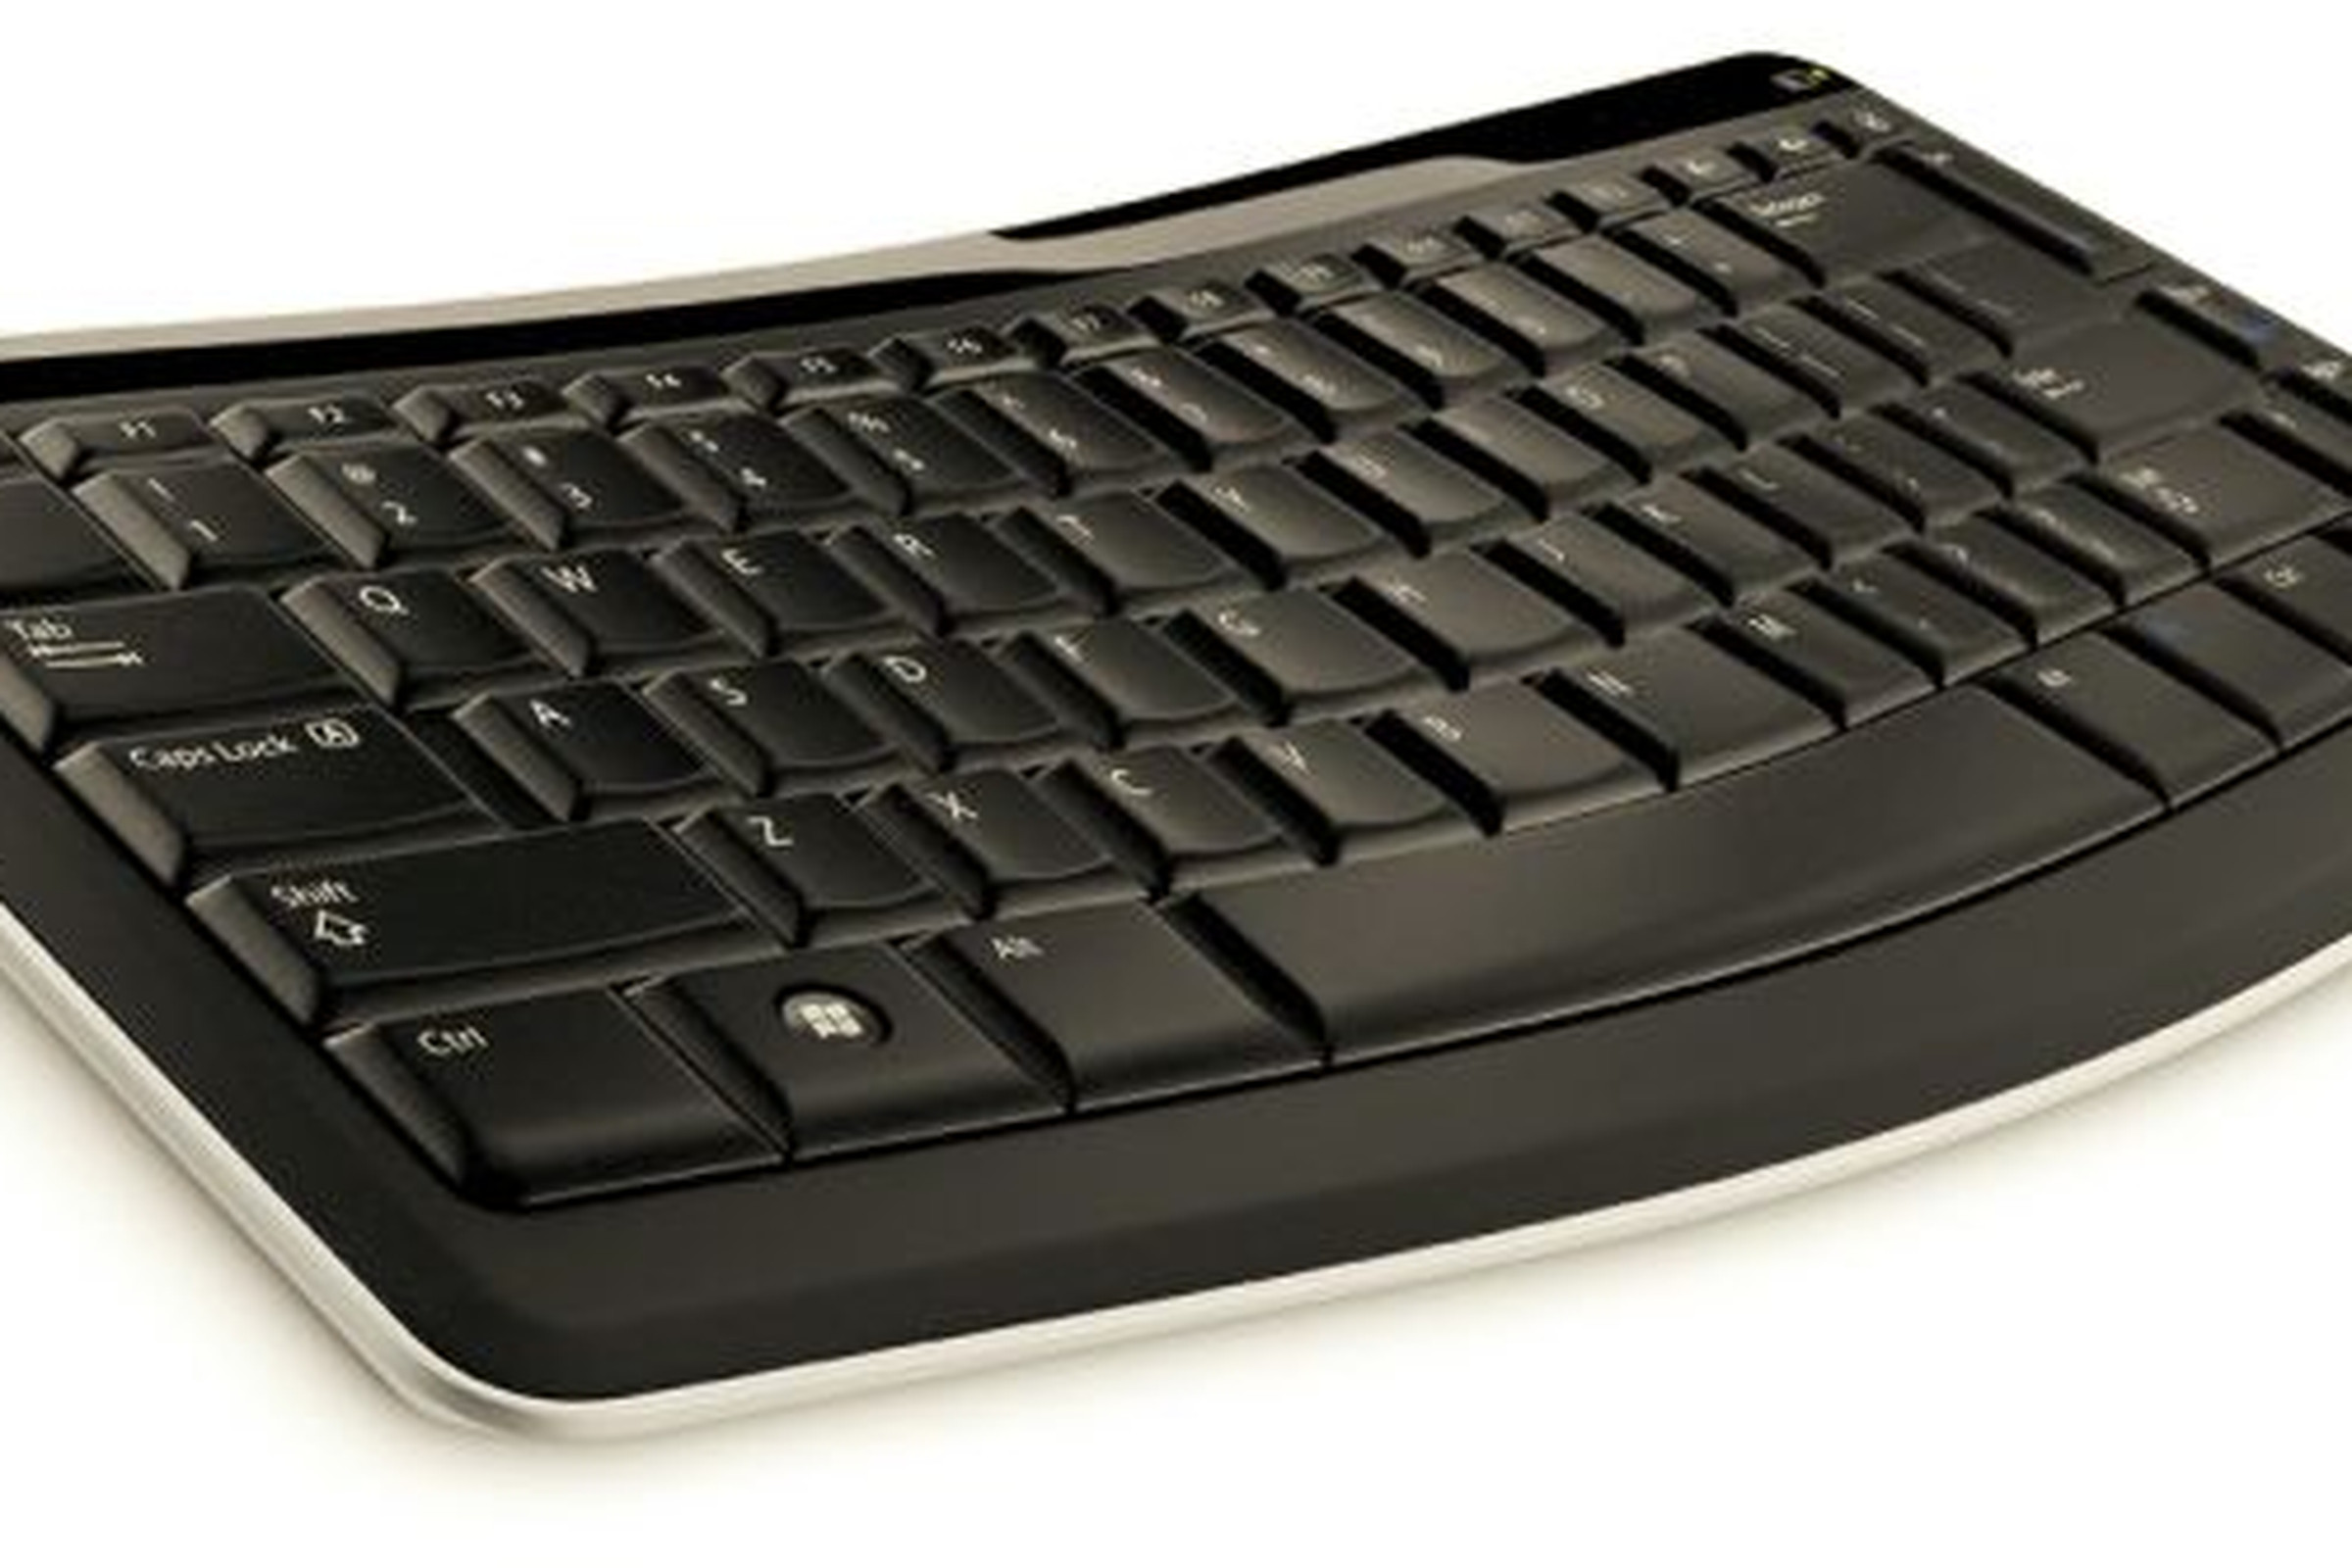 Microsoft Bluetooth Mobile Keyboard 5000